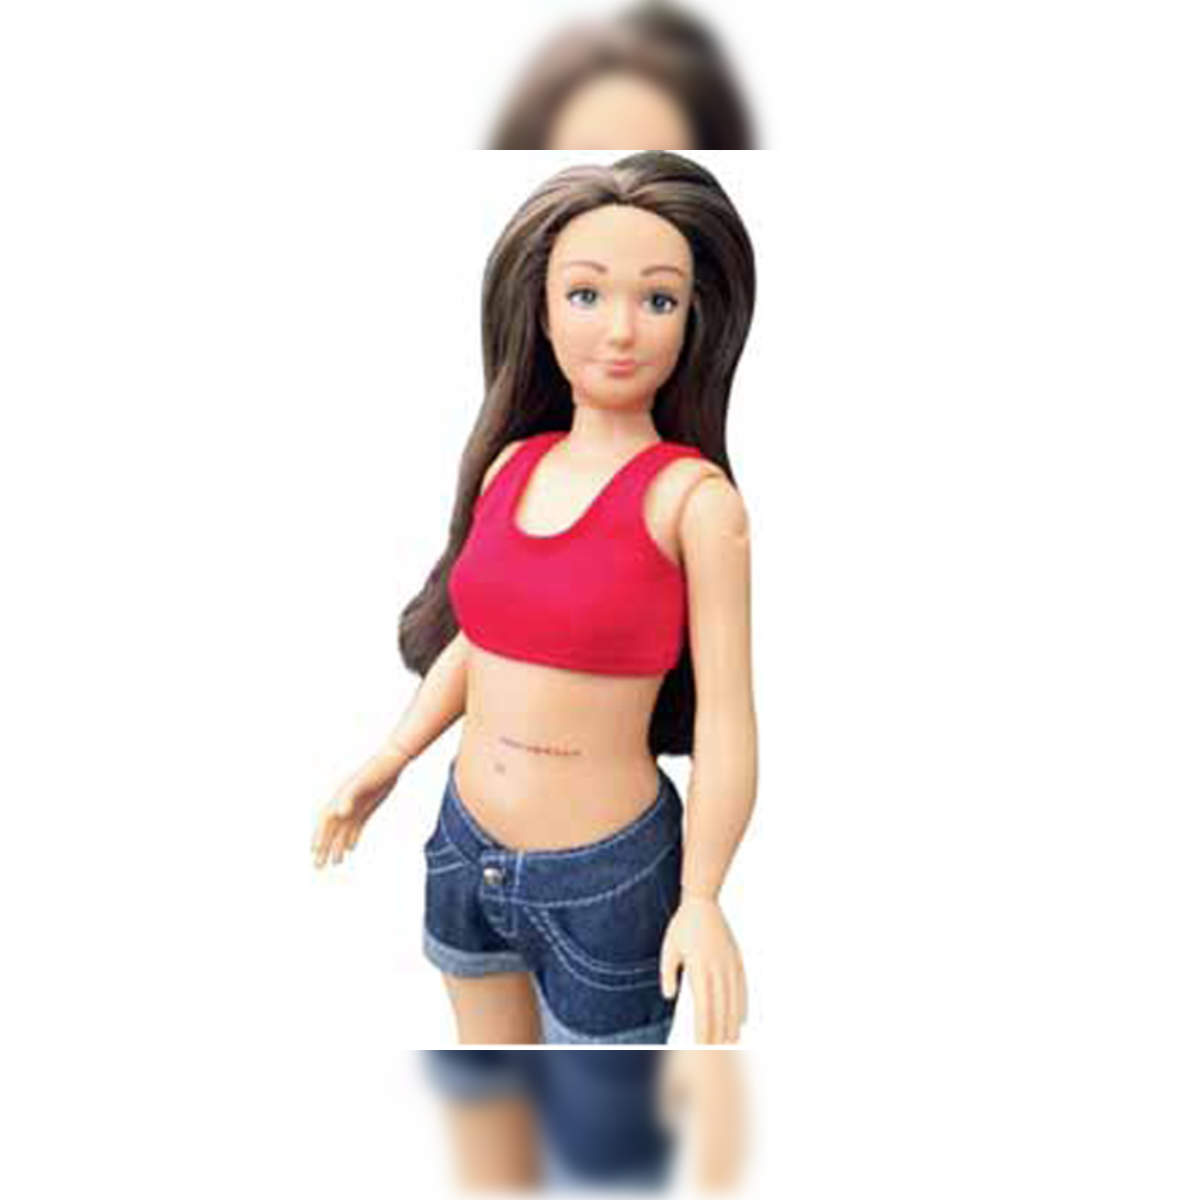 Meet Lammily, the anti-Barbie - The Economic Times